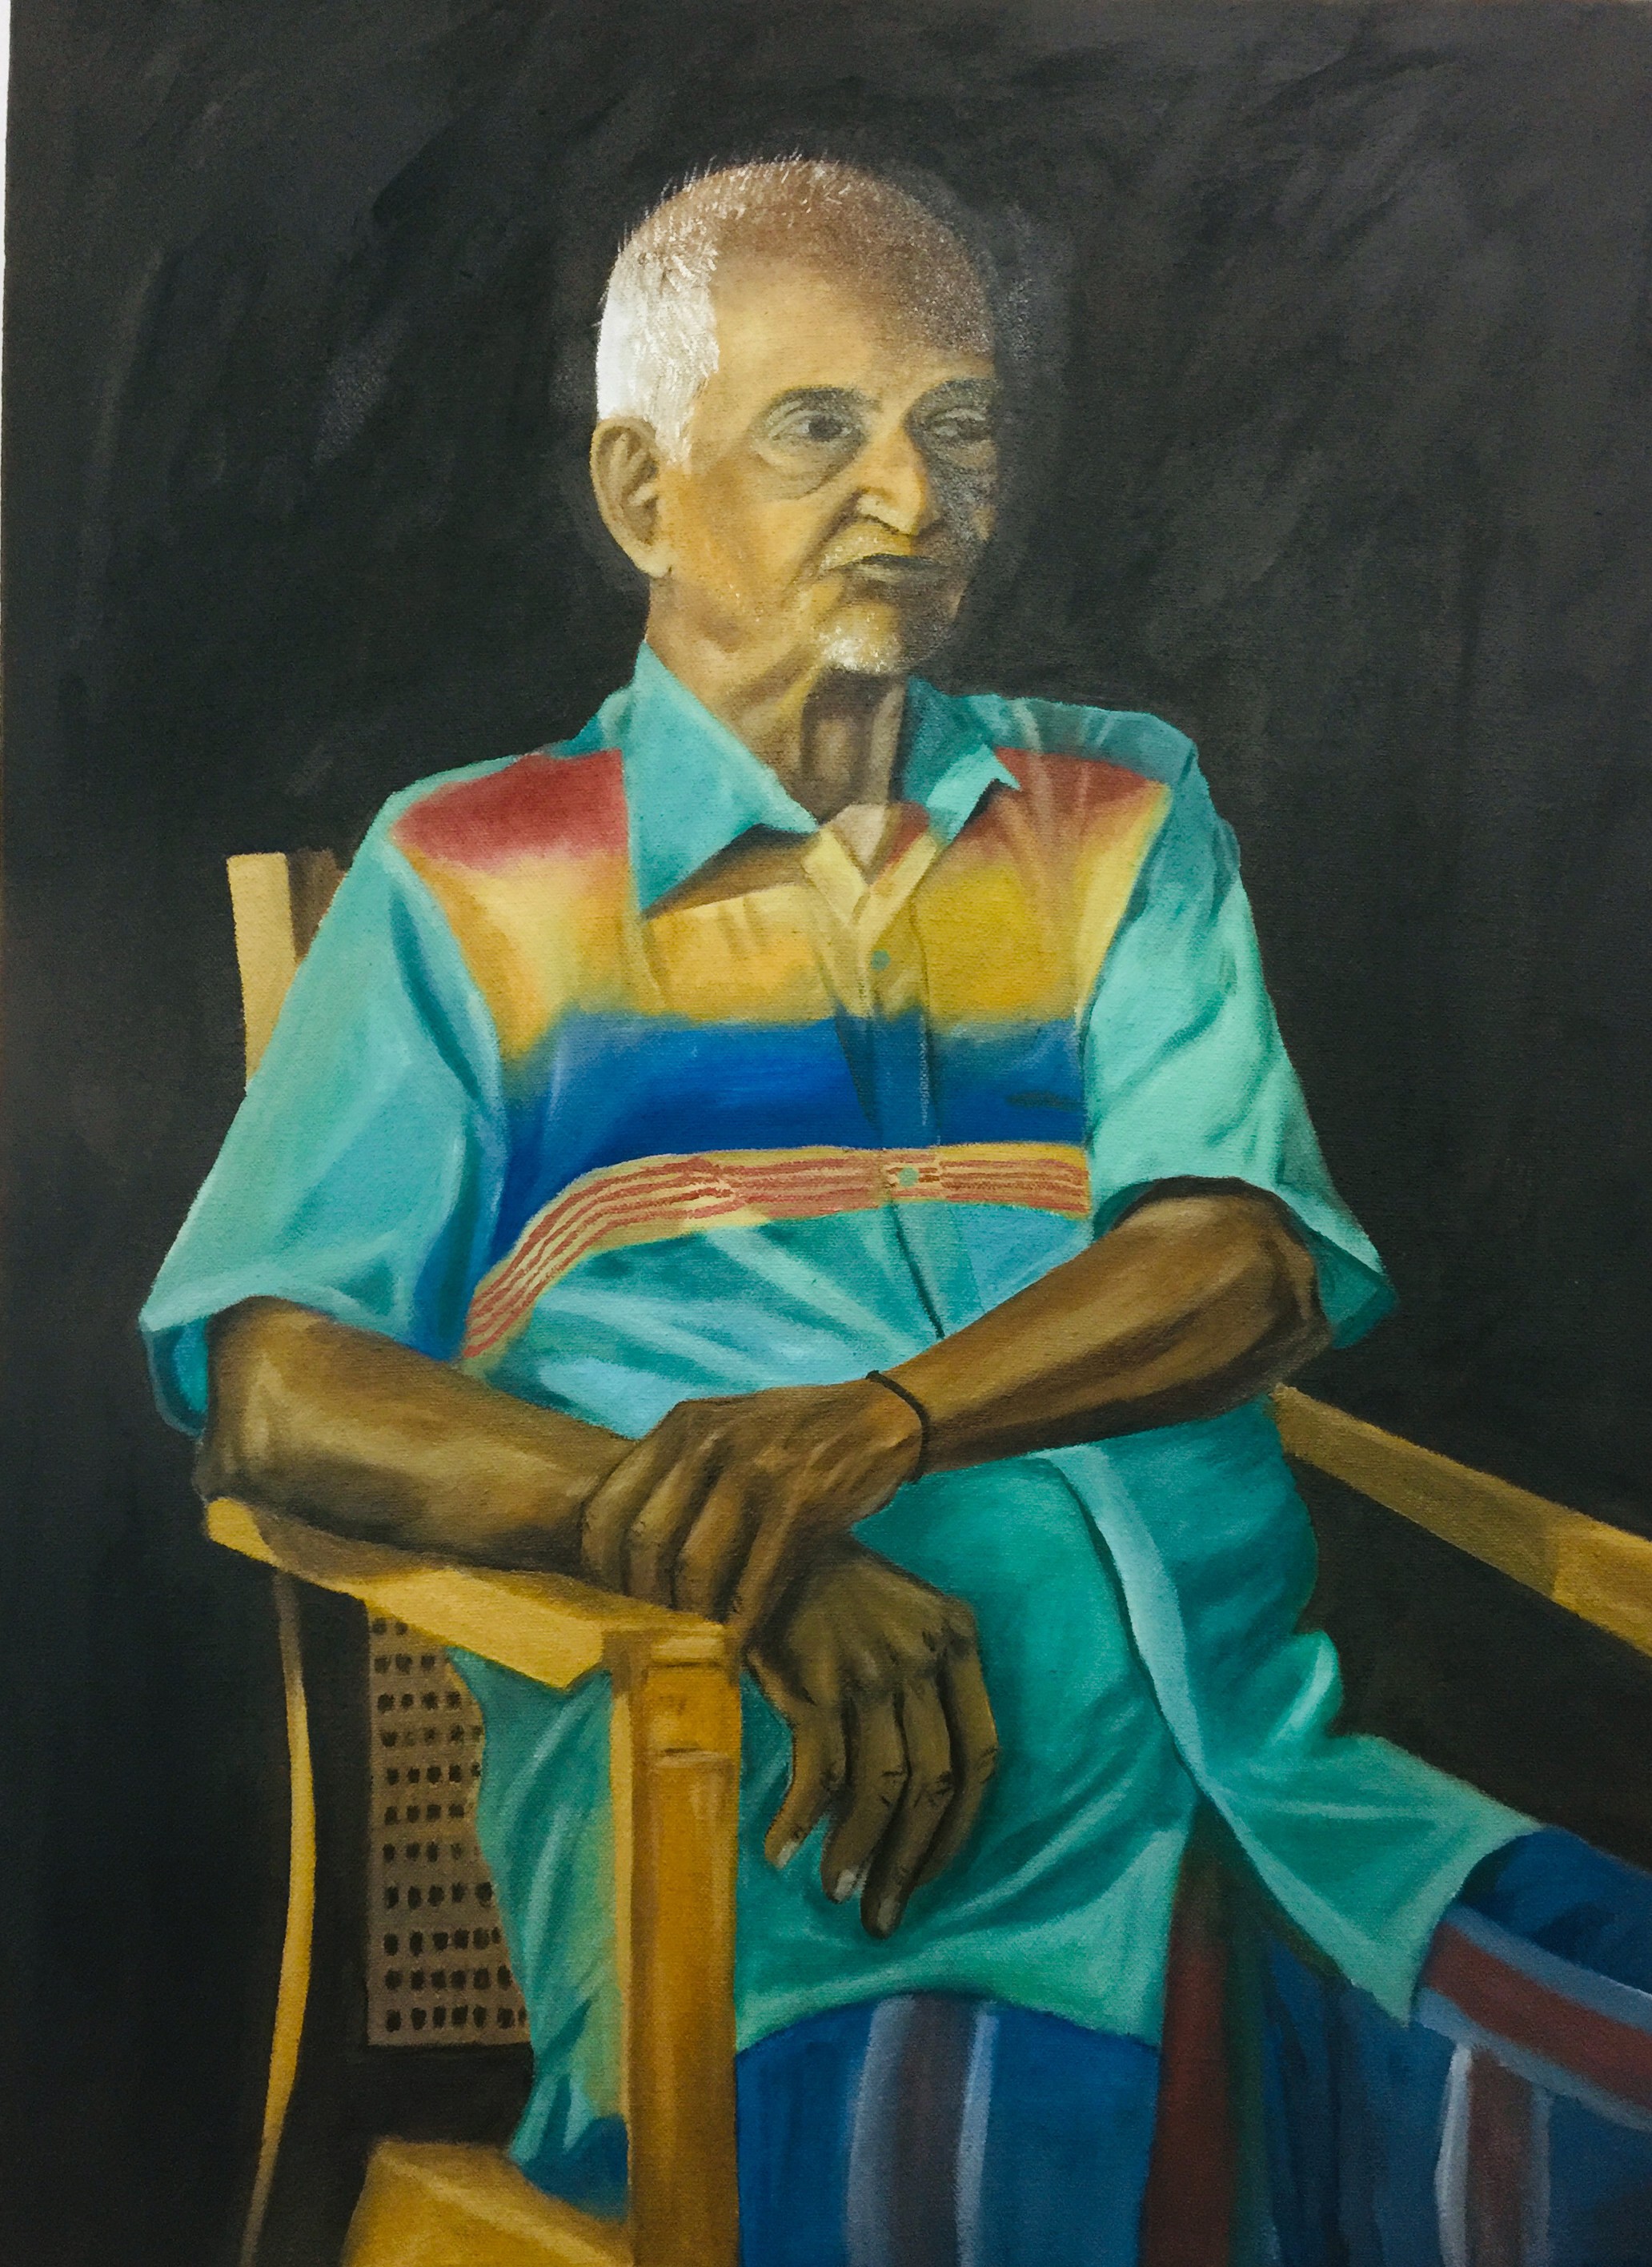 old man by jeyaventhan pirathaksman